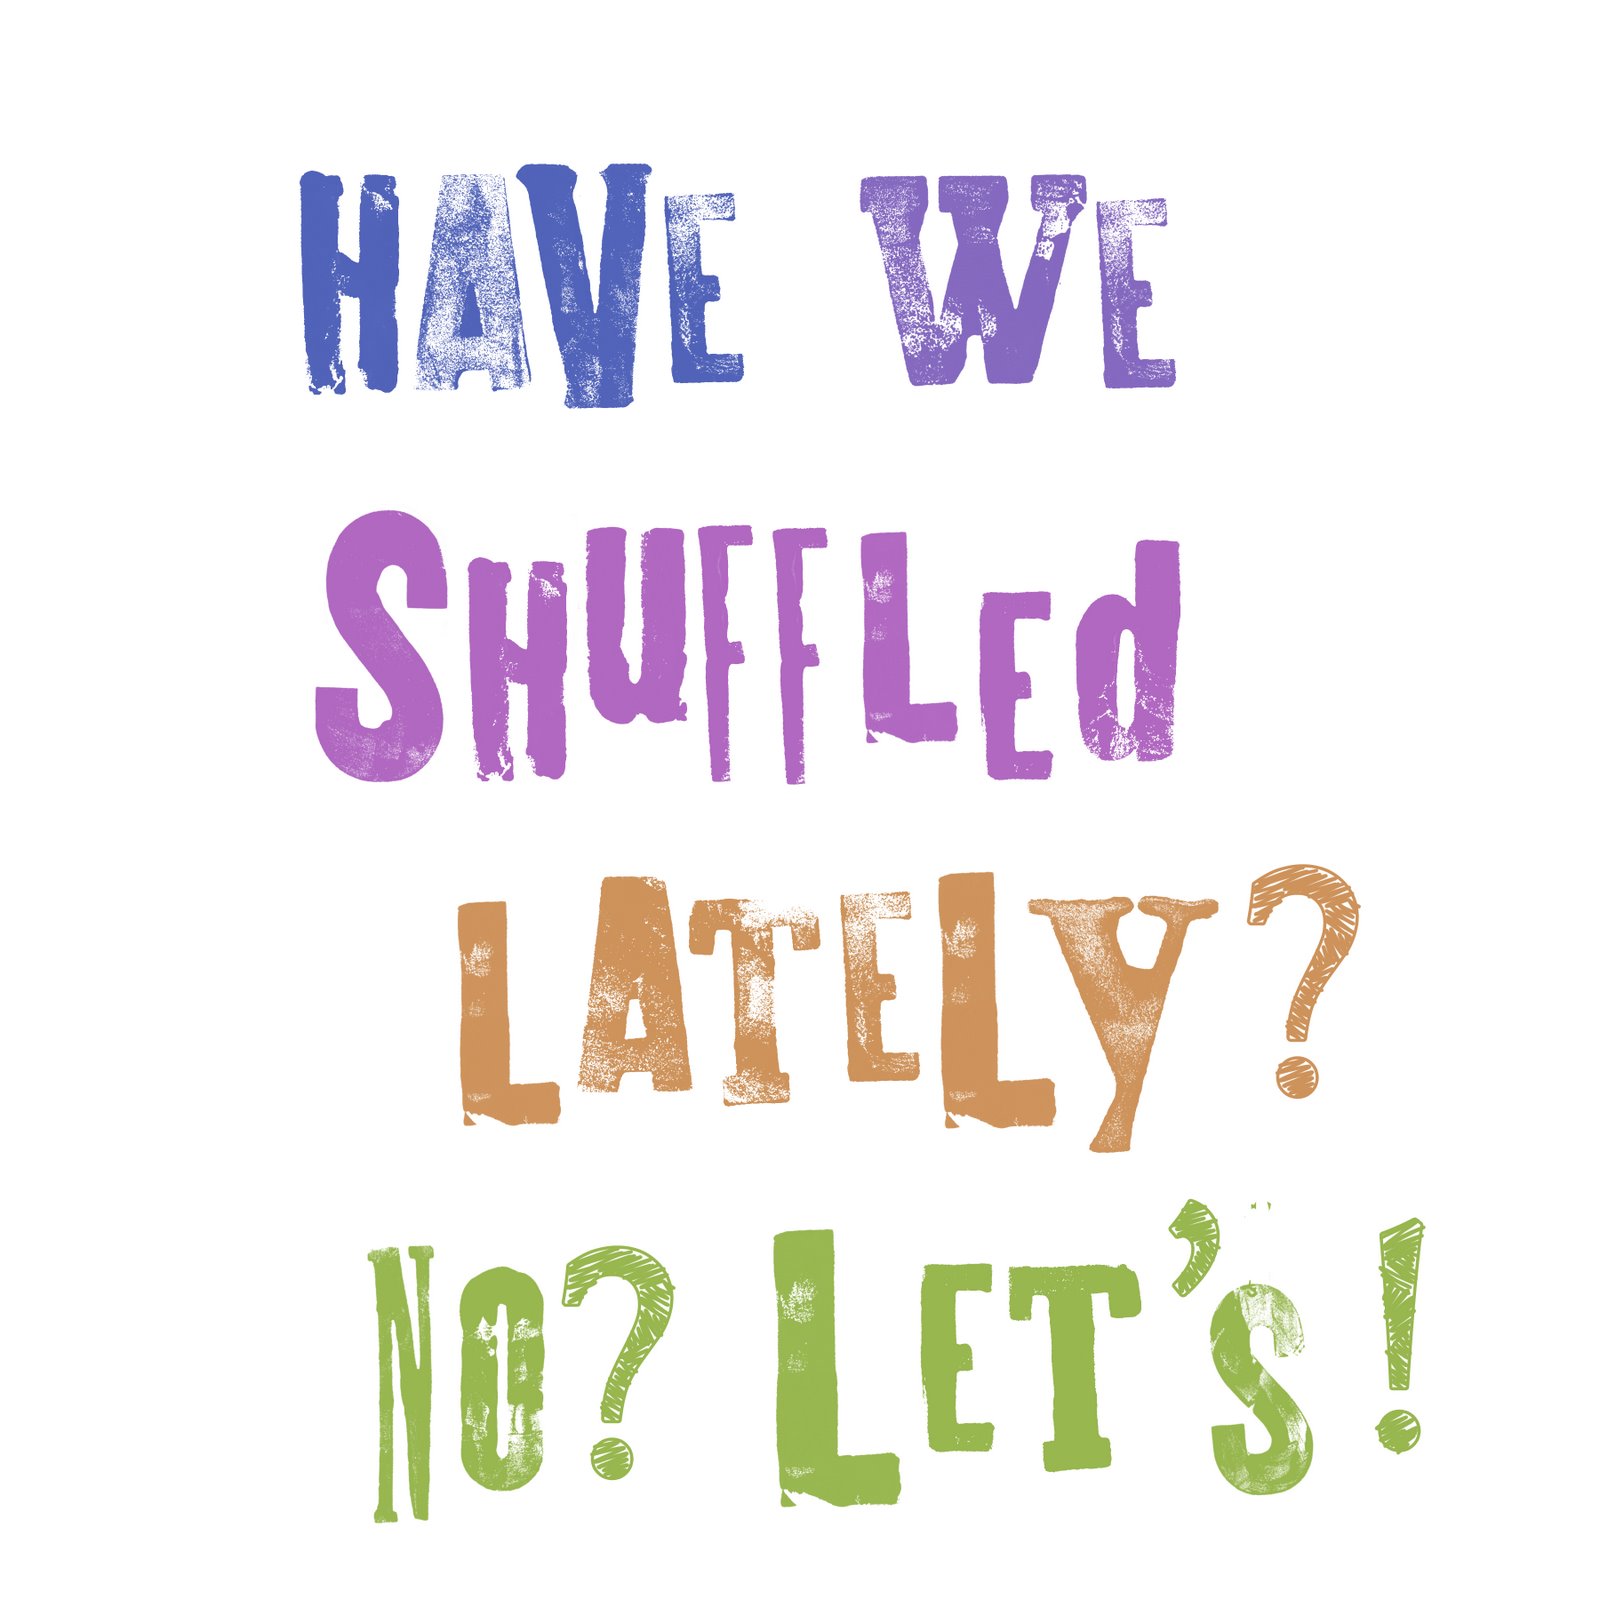 [shuffle+invite.jpg]